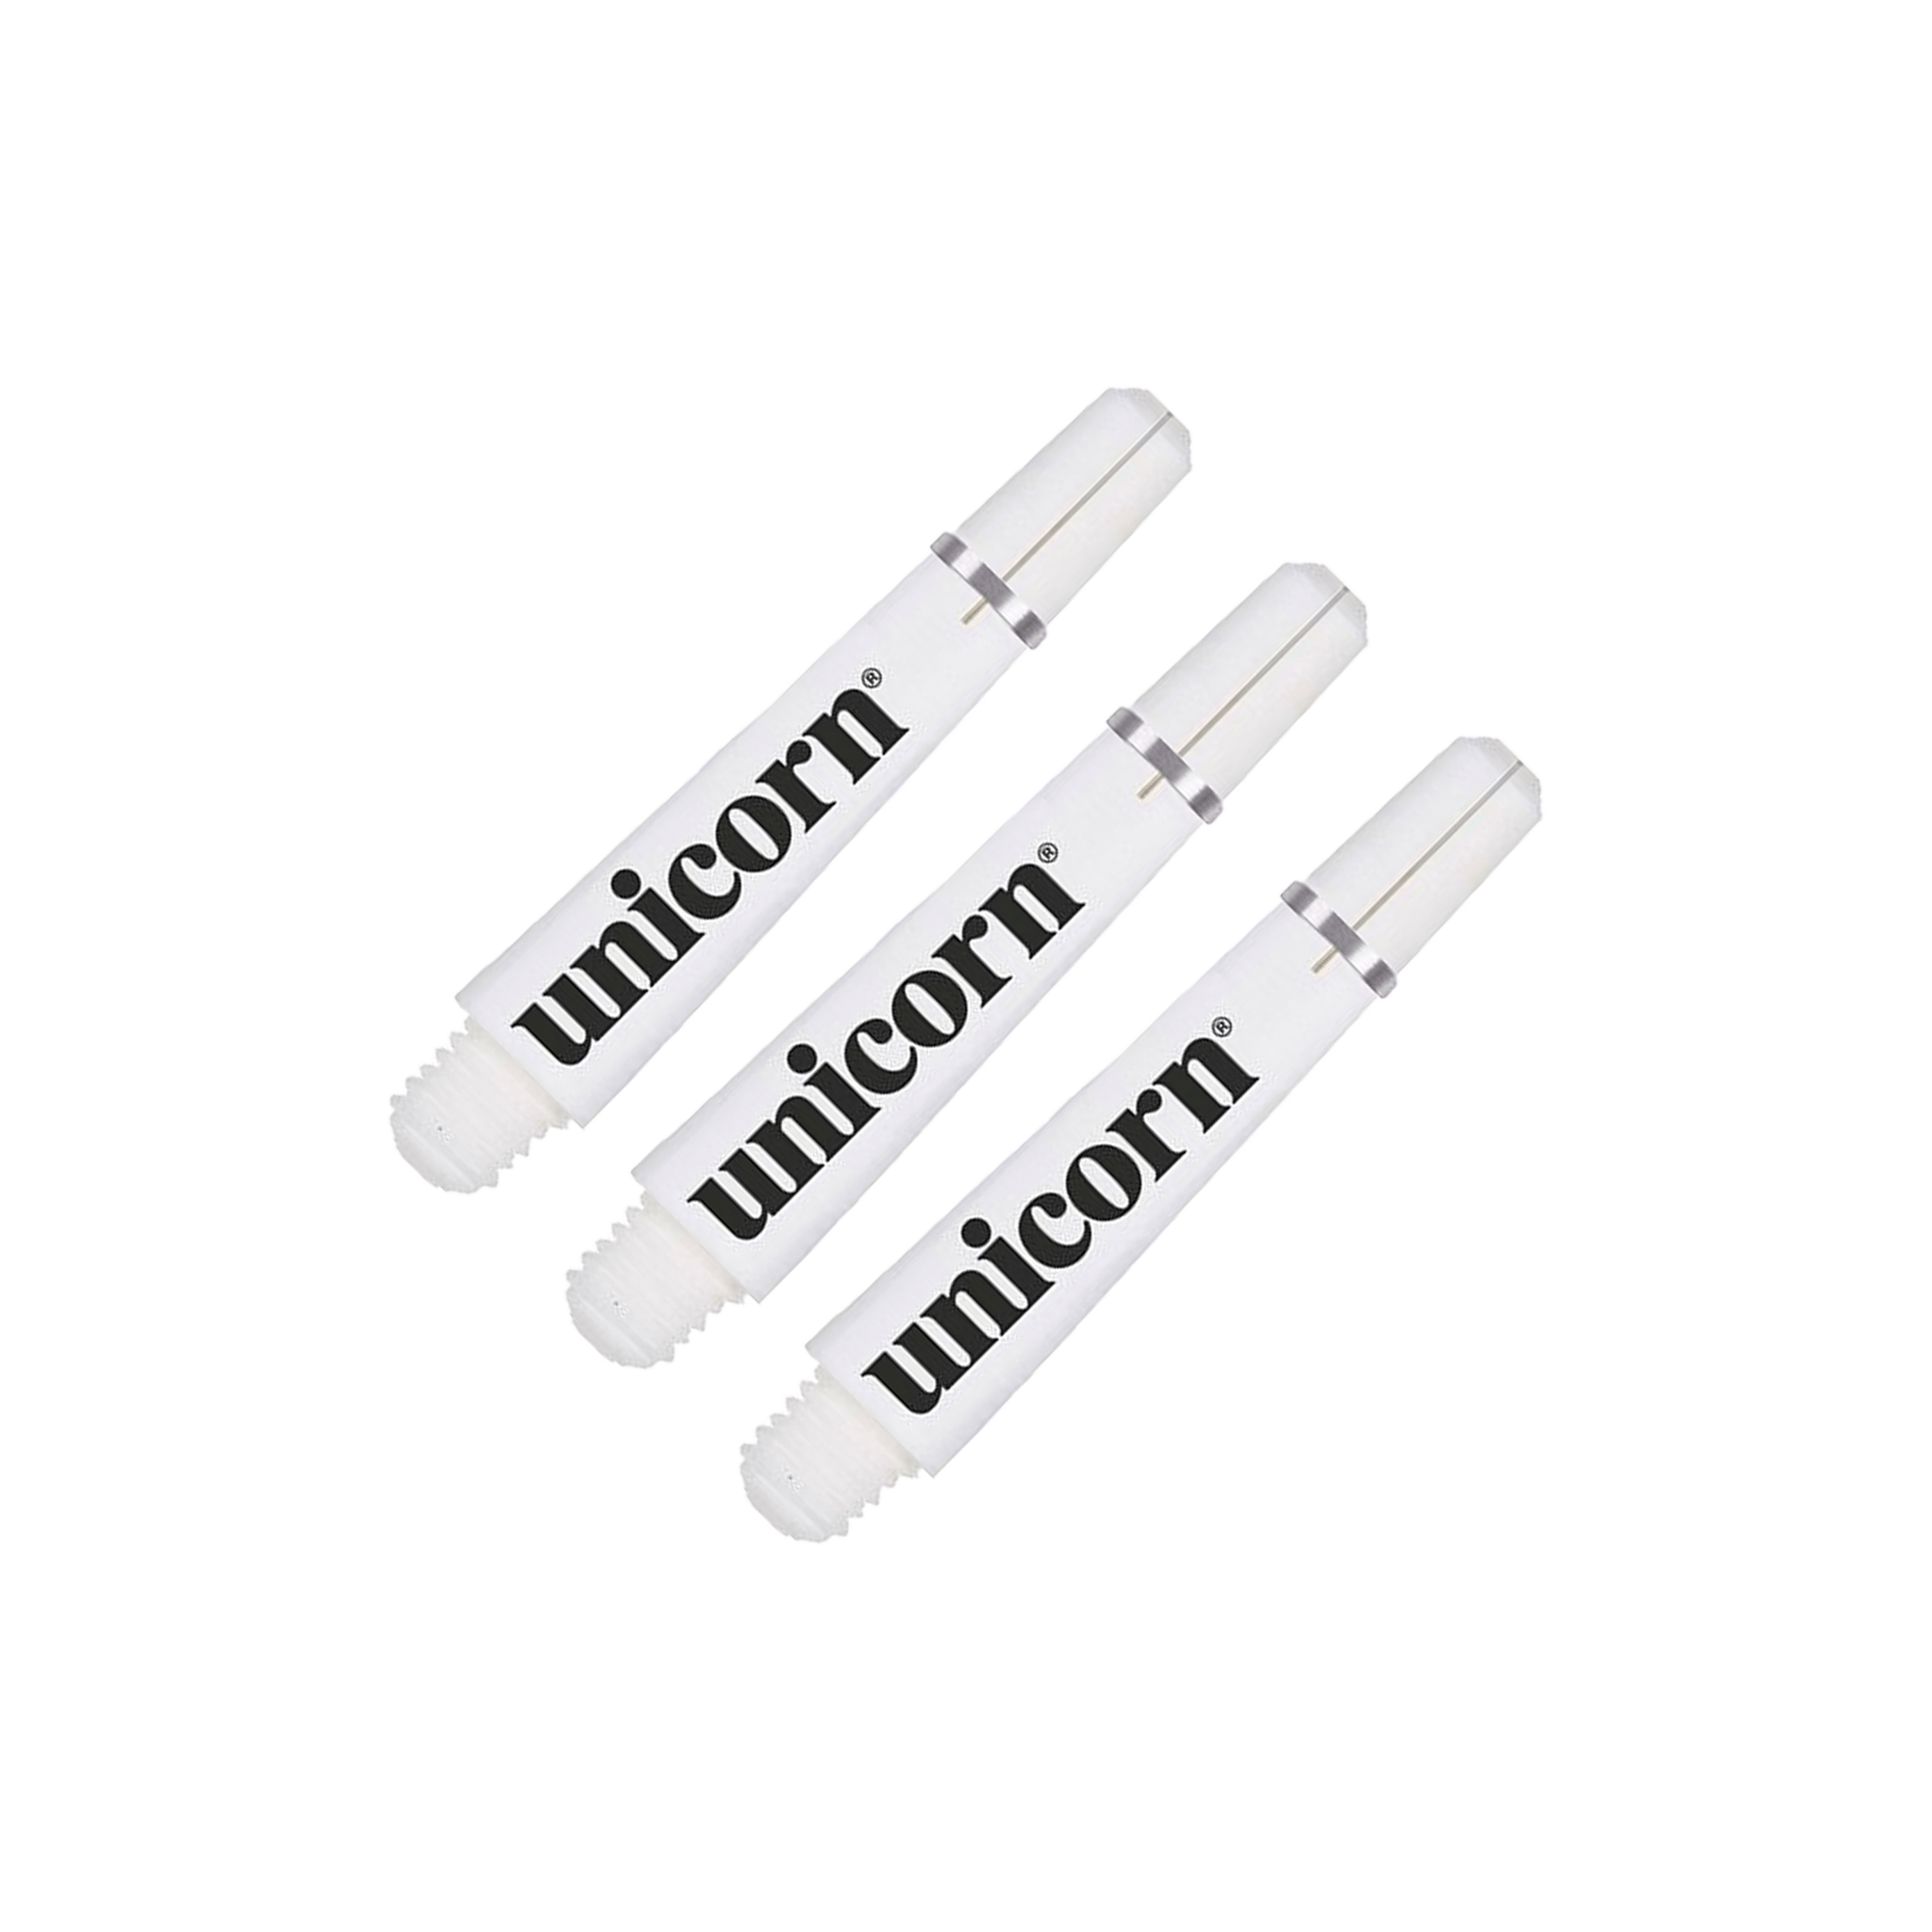 Unicorn Gripper 4 Ultra Short (29mm) Polycarbonate Dart Shafts White Shafts